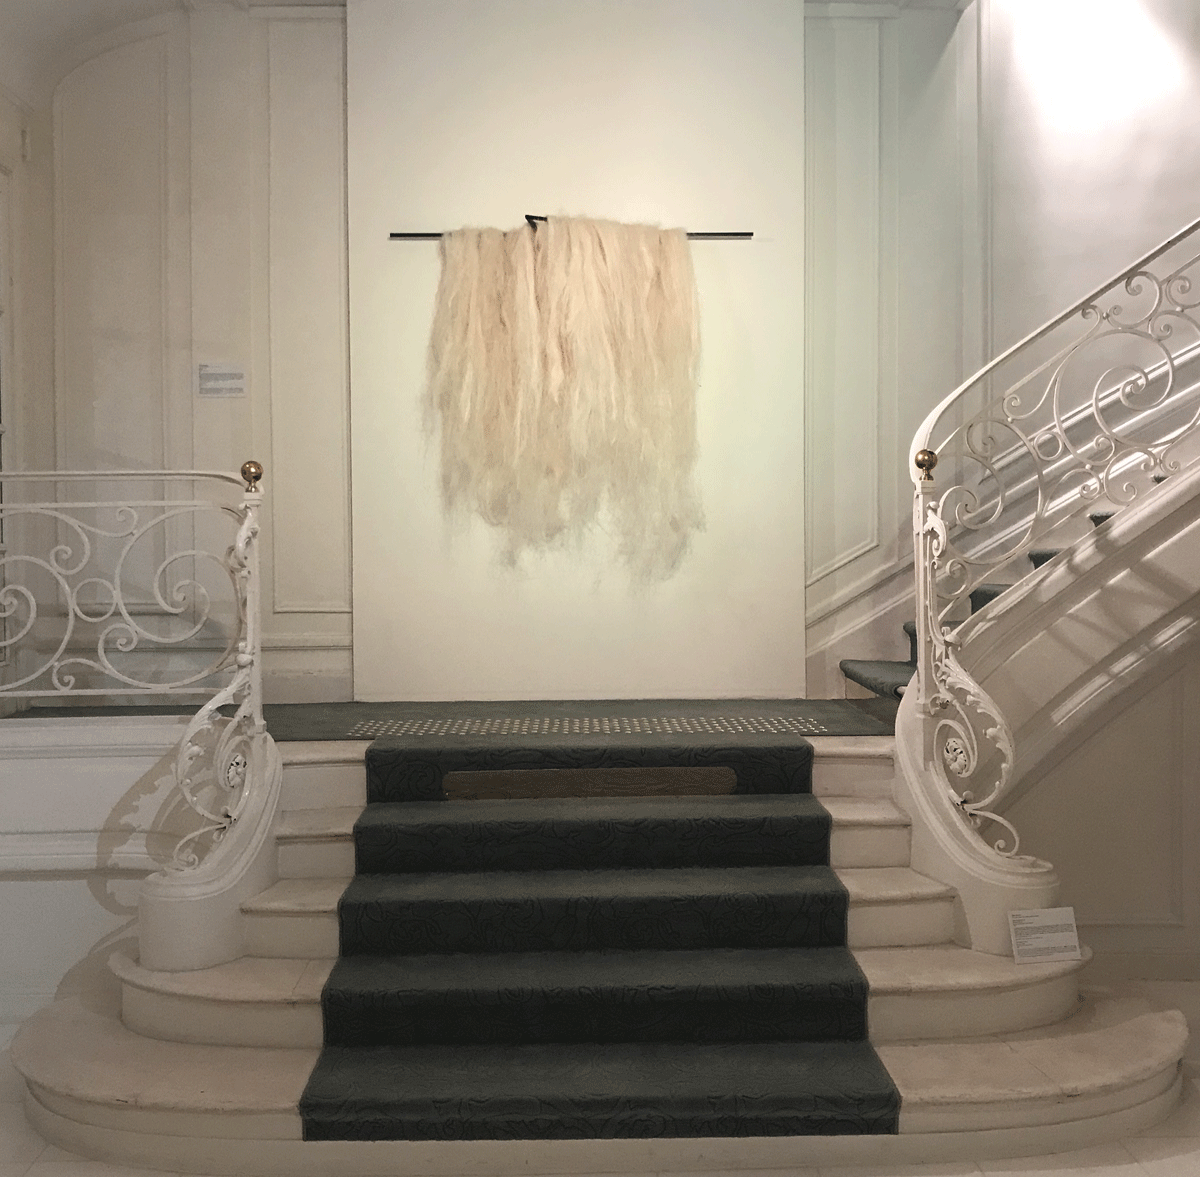 Hôtel Meurice escalier